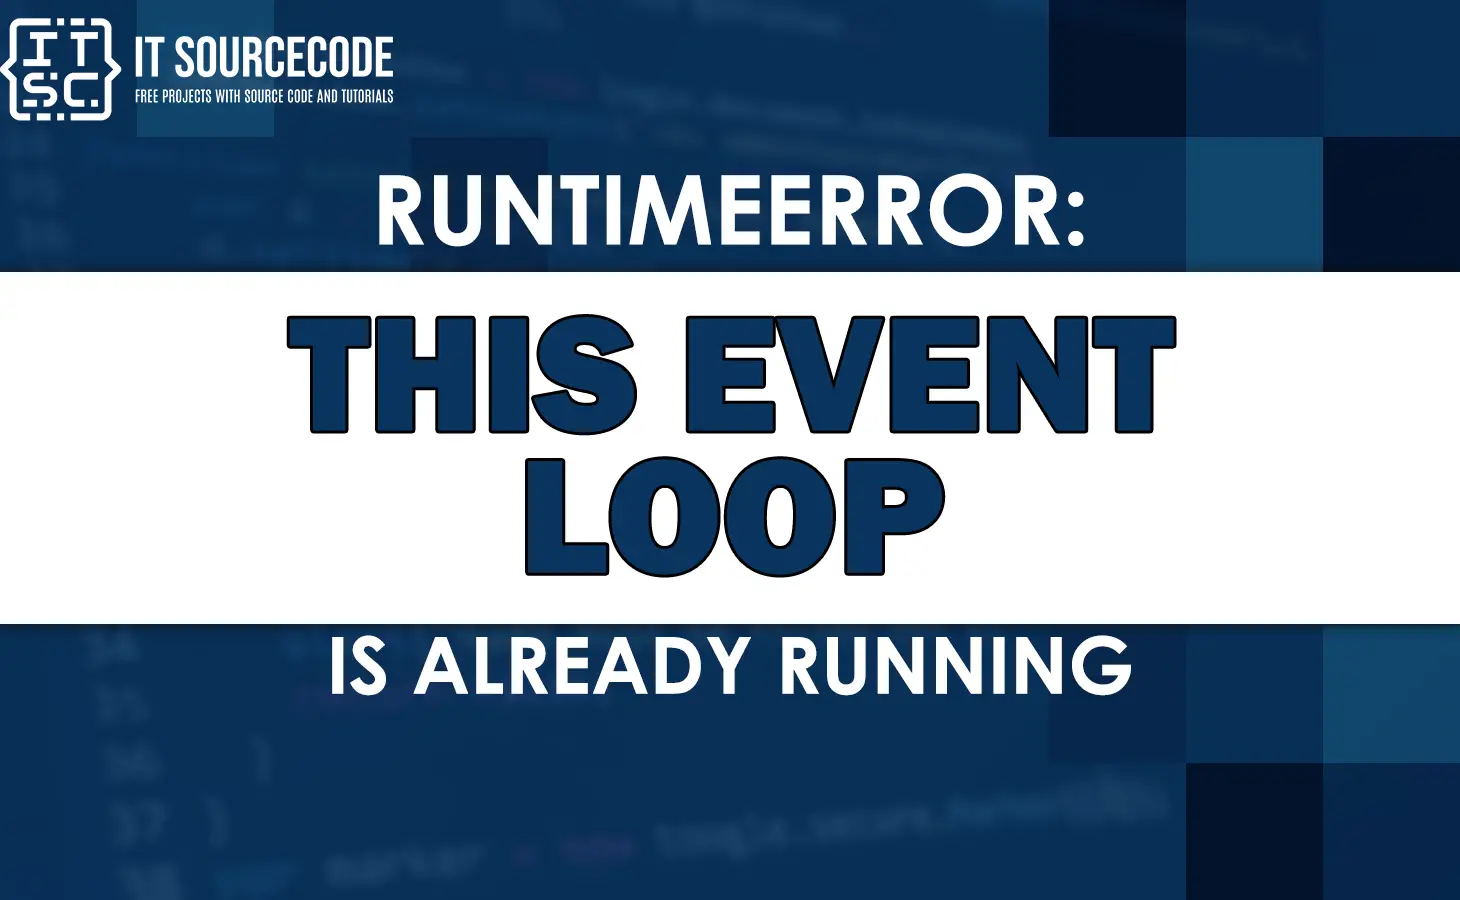 Runtimeerror this event loop is already running